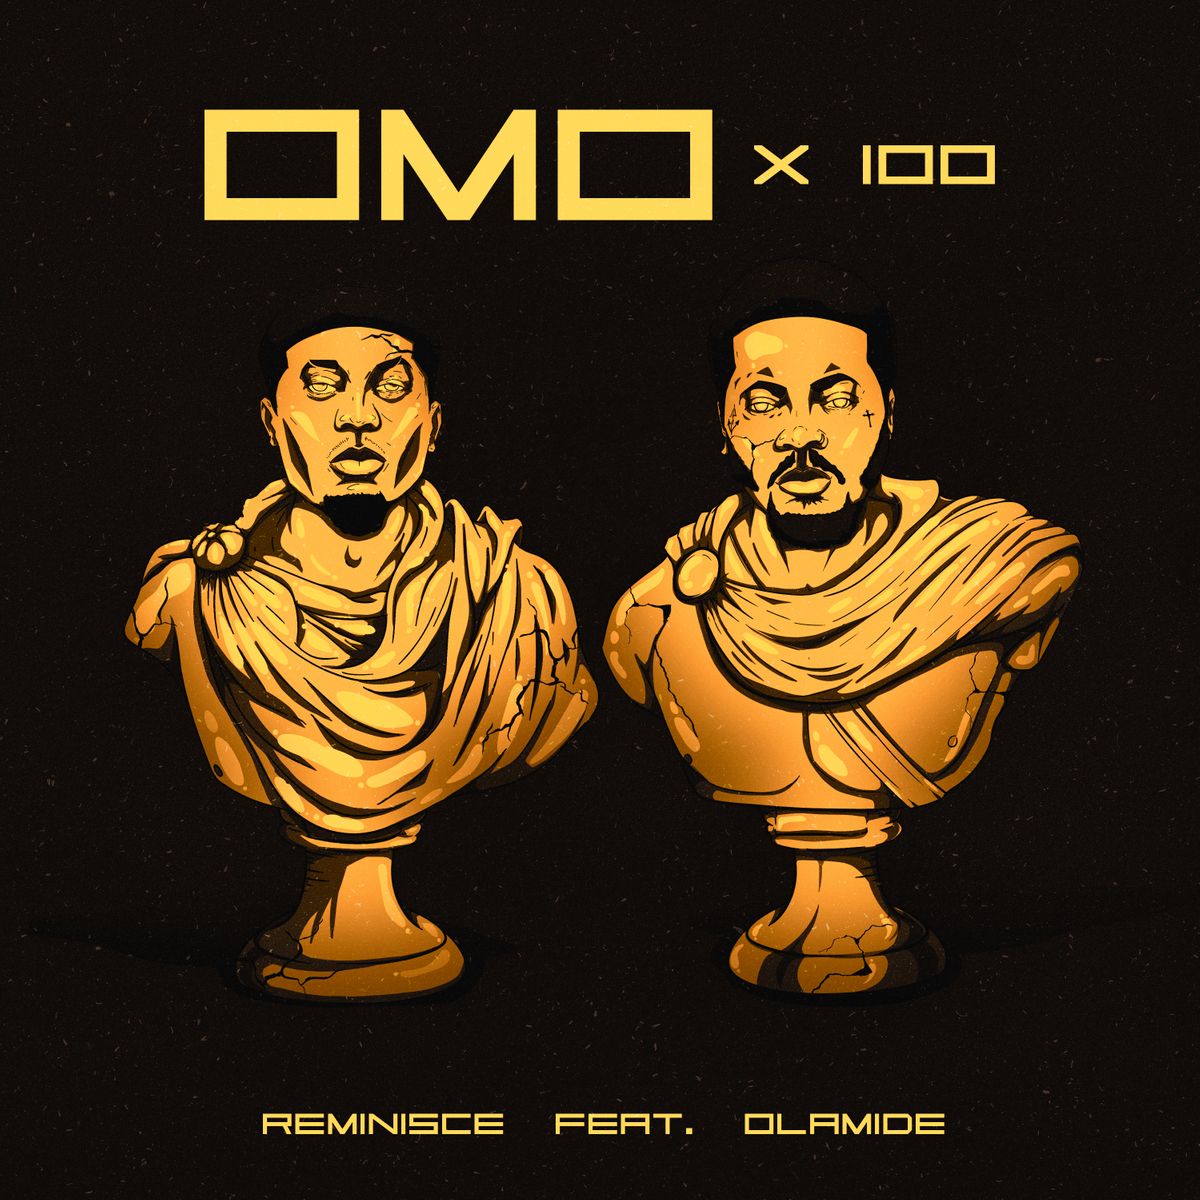 Reminisce ft. Olamide - Omo X 100